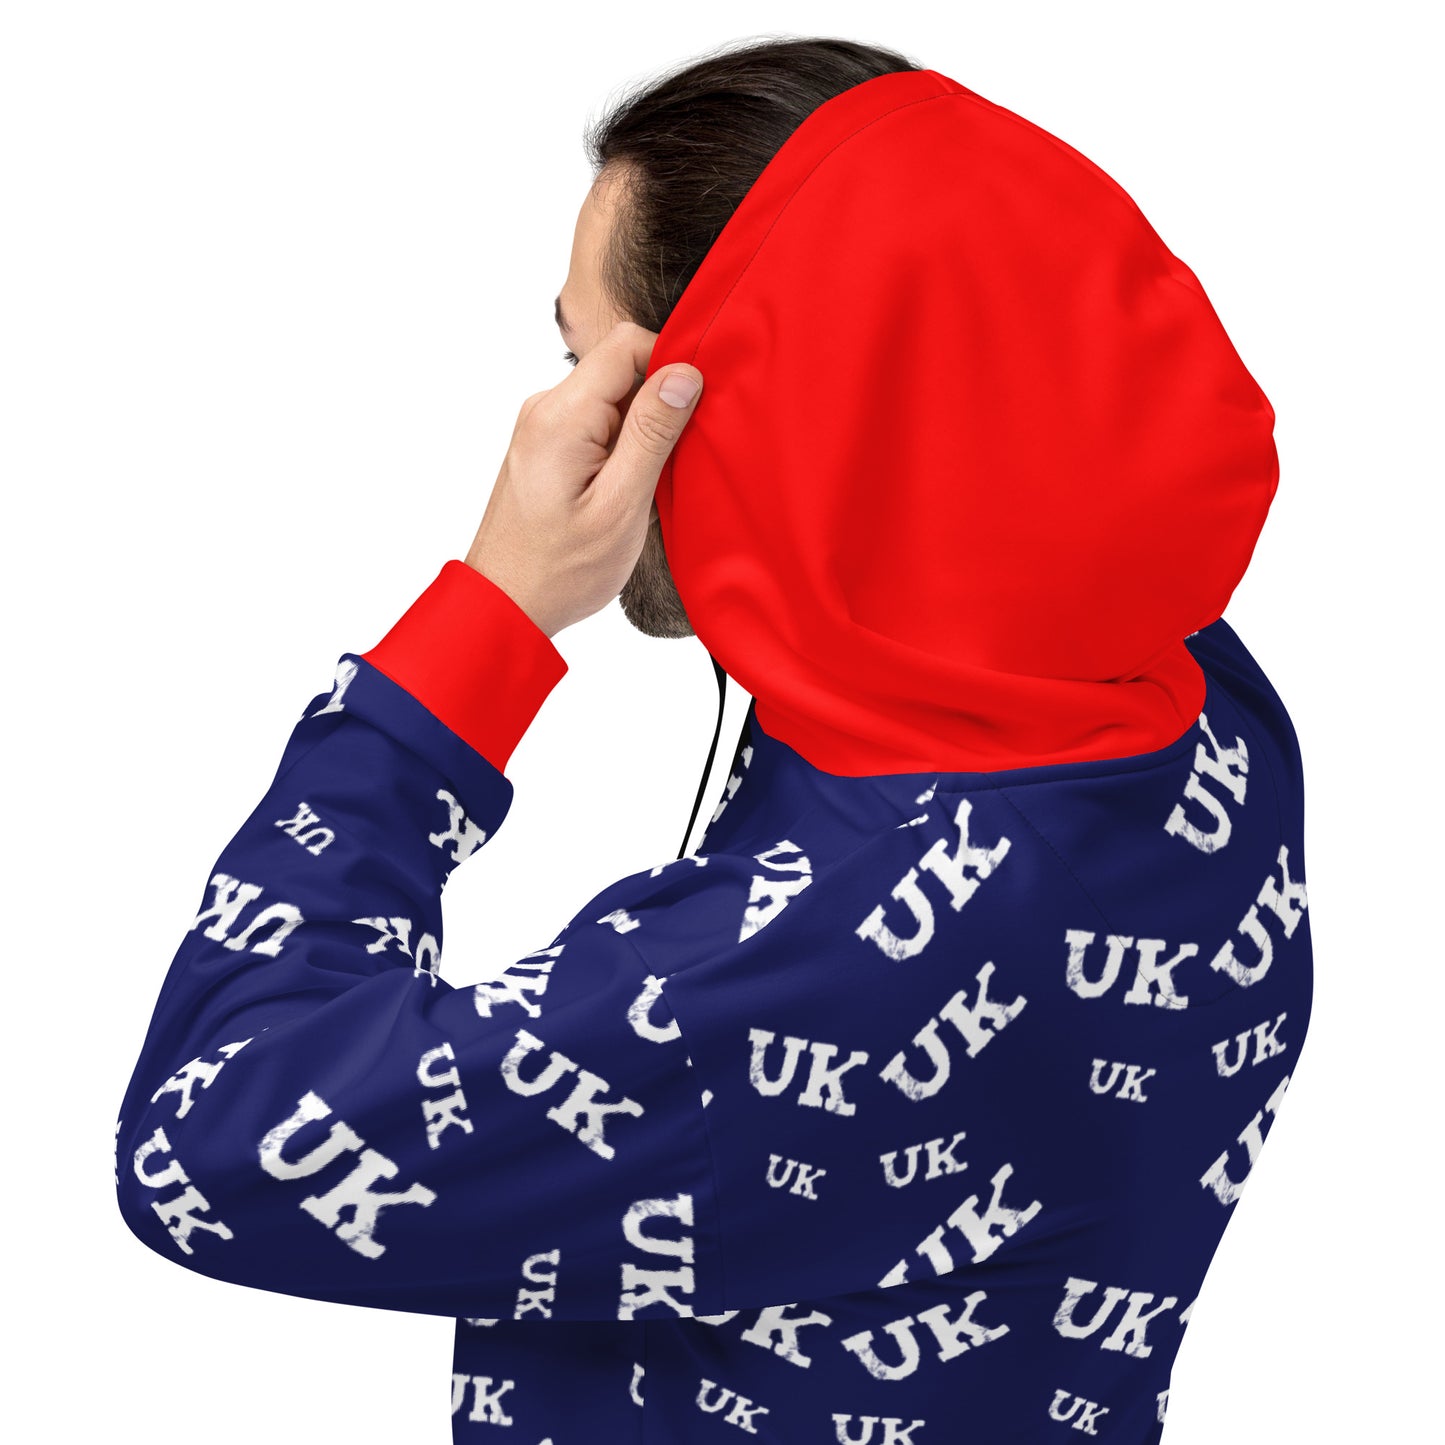 UK Hoodie with Union Jack Design